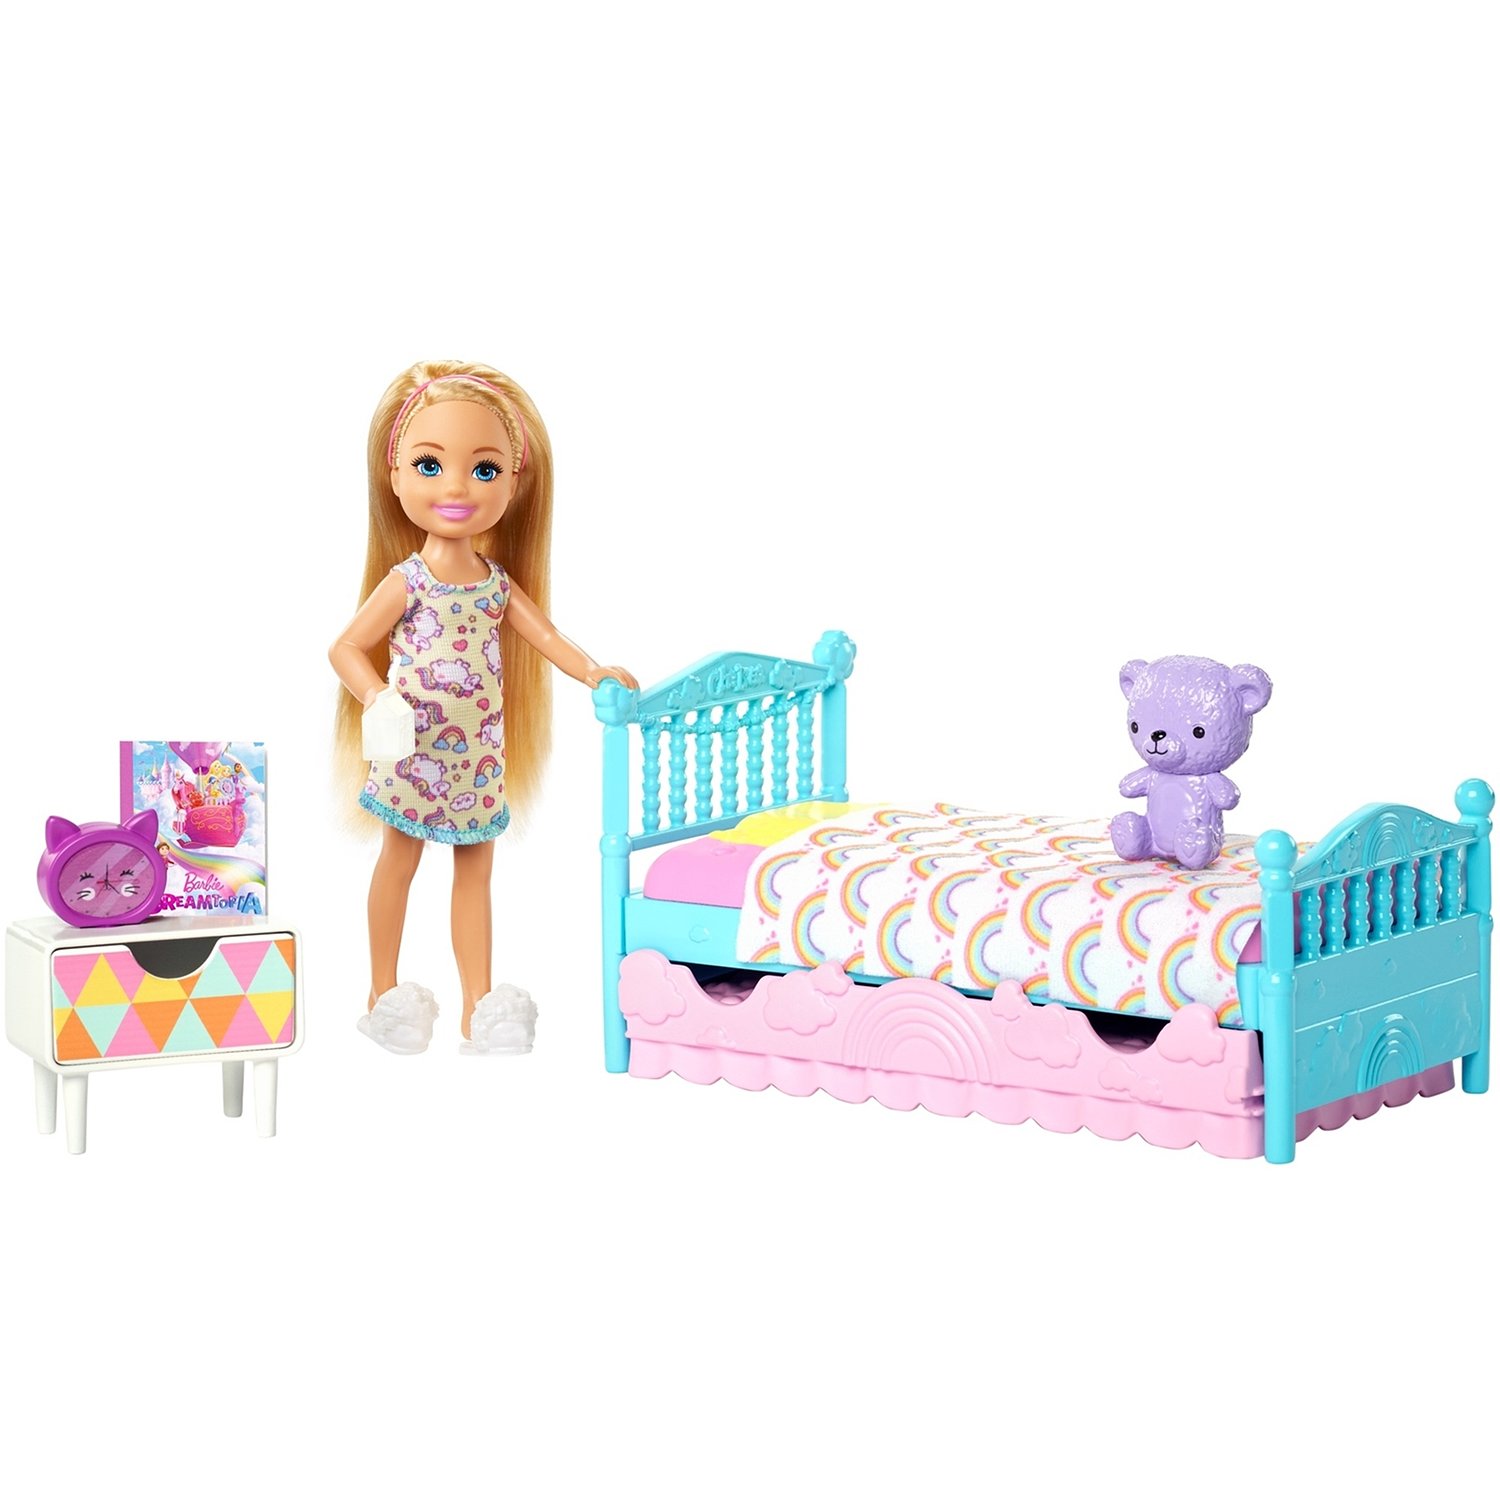 Набор Barbie FXG83 Челси и набор мебели